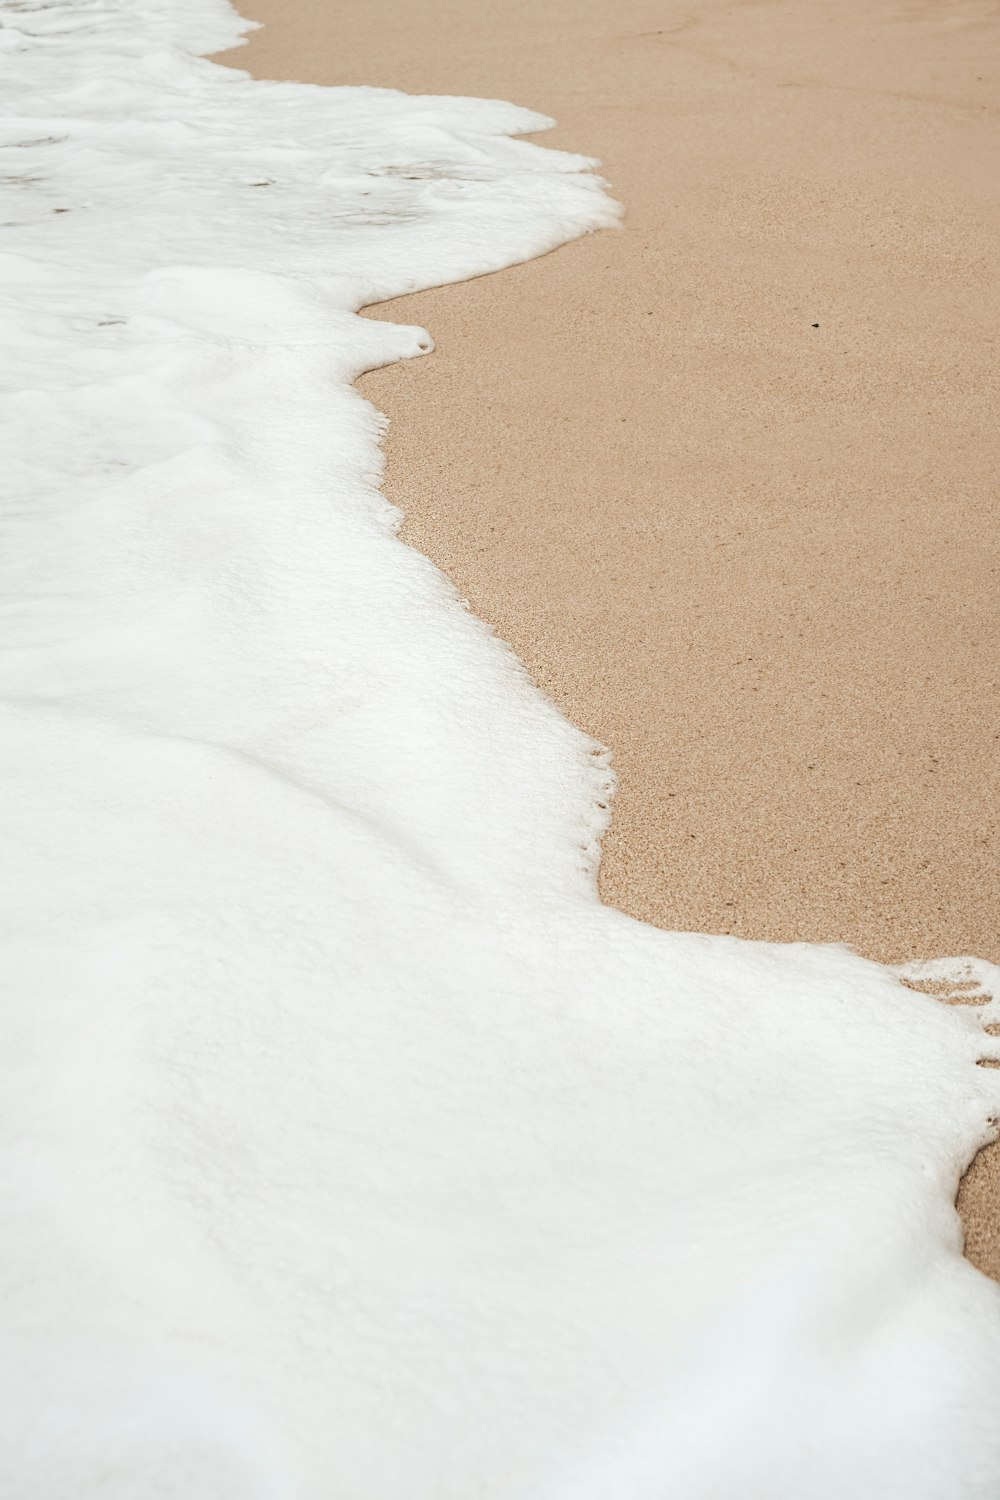 neve branca na areia marrom